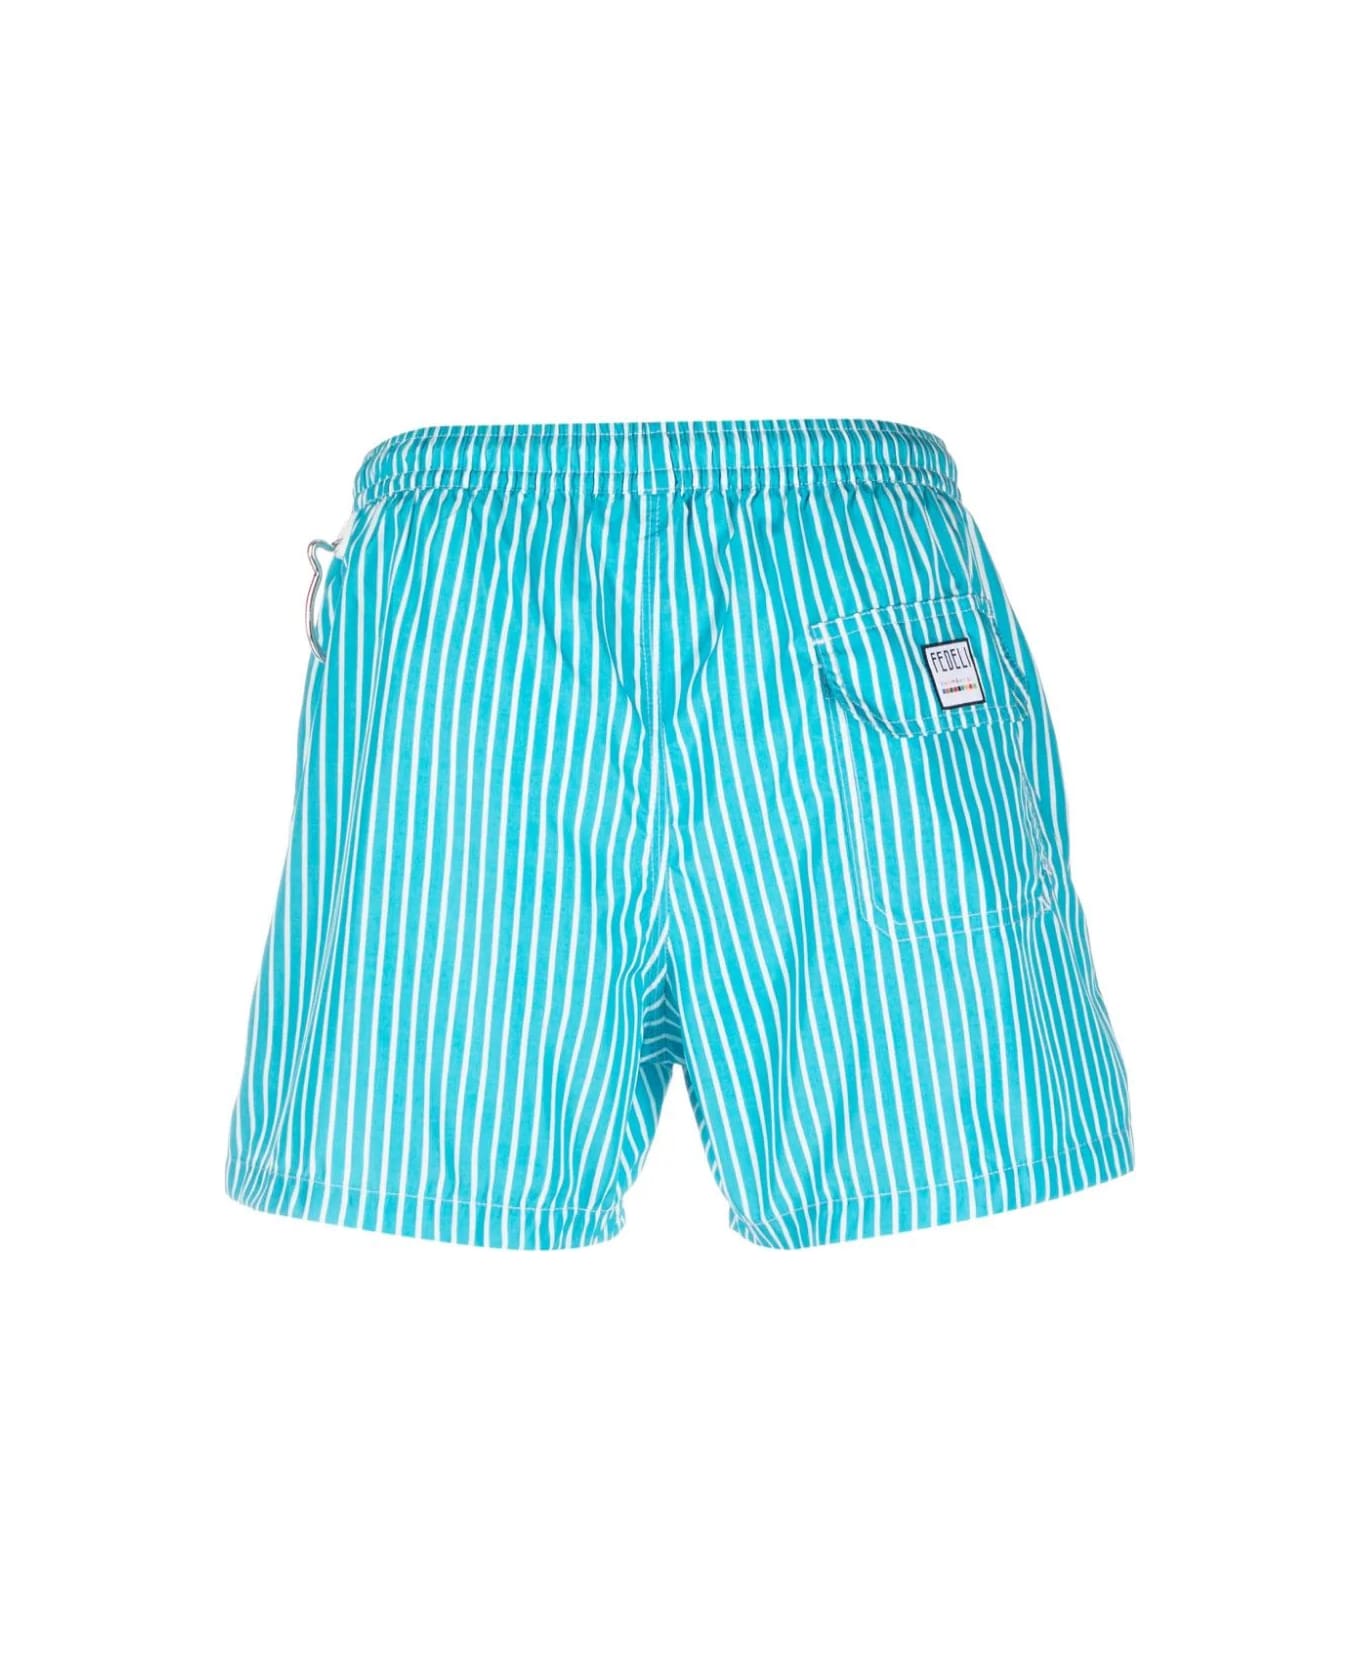 Fedeli Light Blue And White Striped Swim Shorts - Blue スイムトランクス